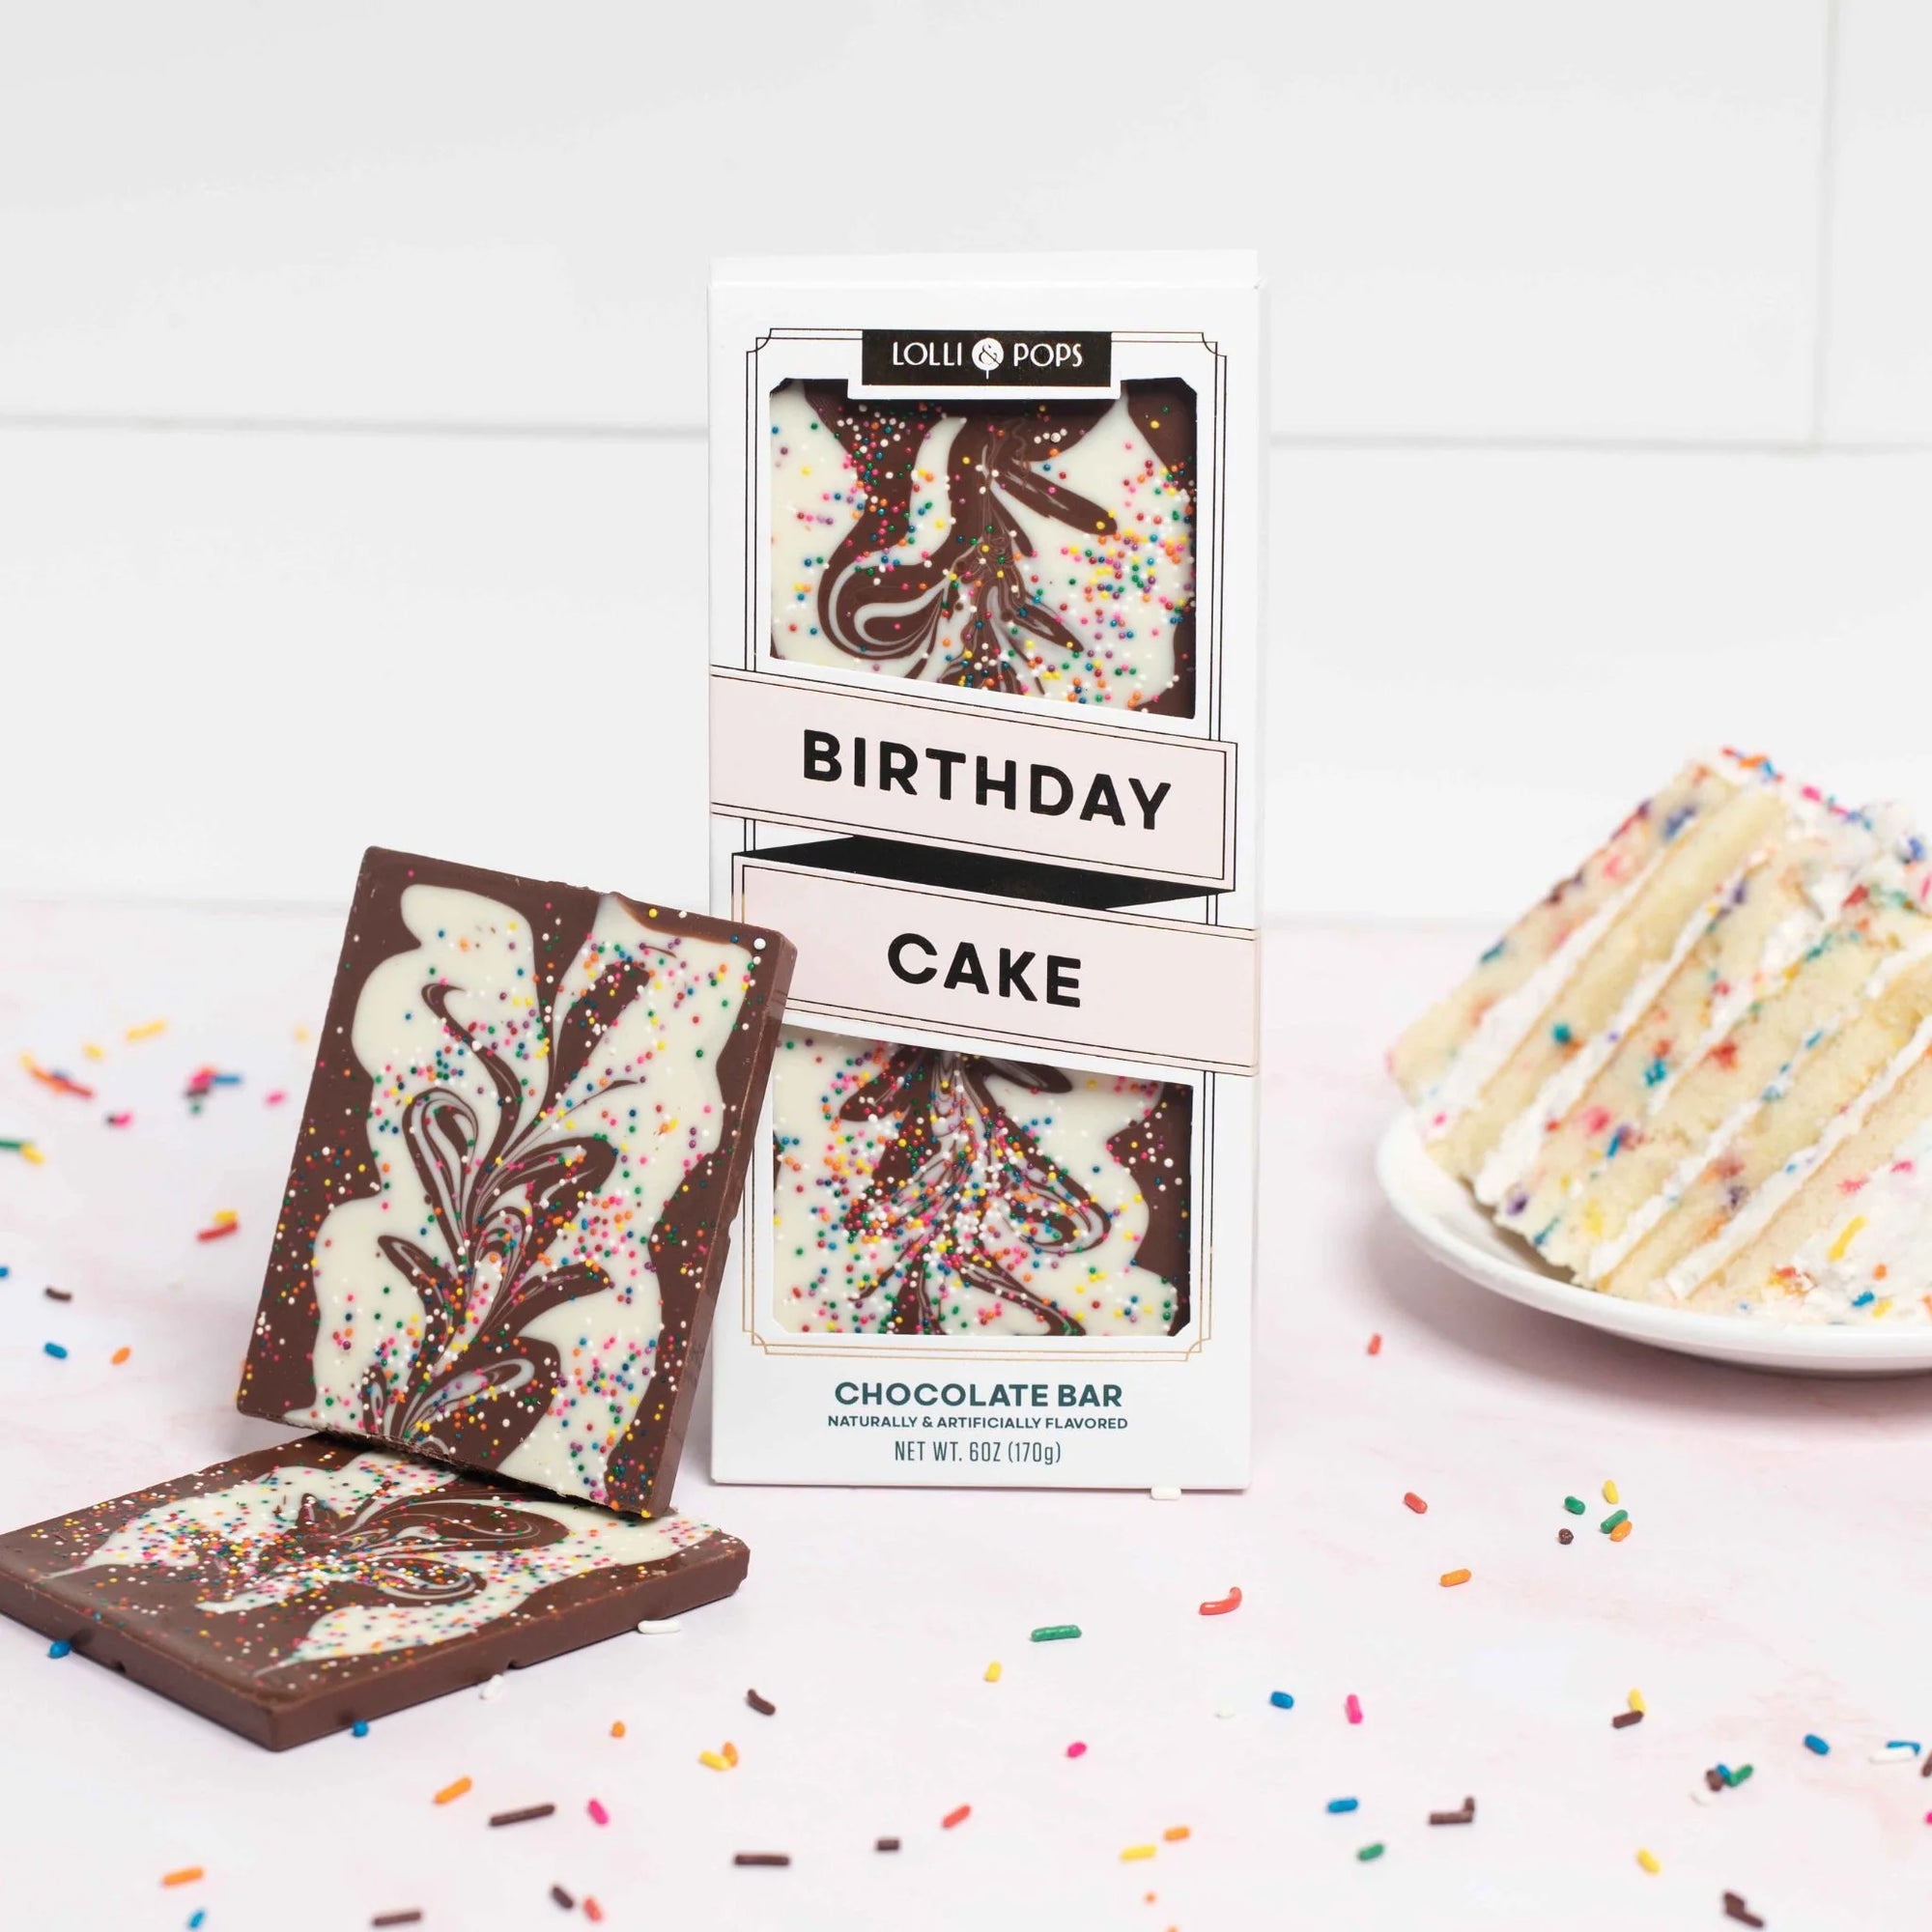 Birthday Cake Topped Chocolate Bar | Lolli & Pops